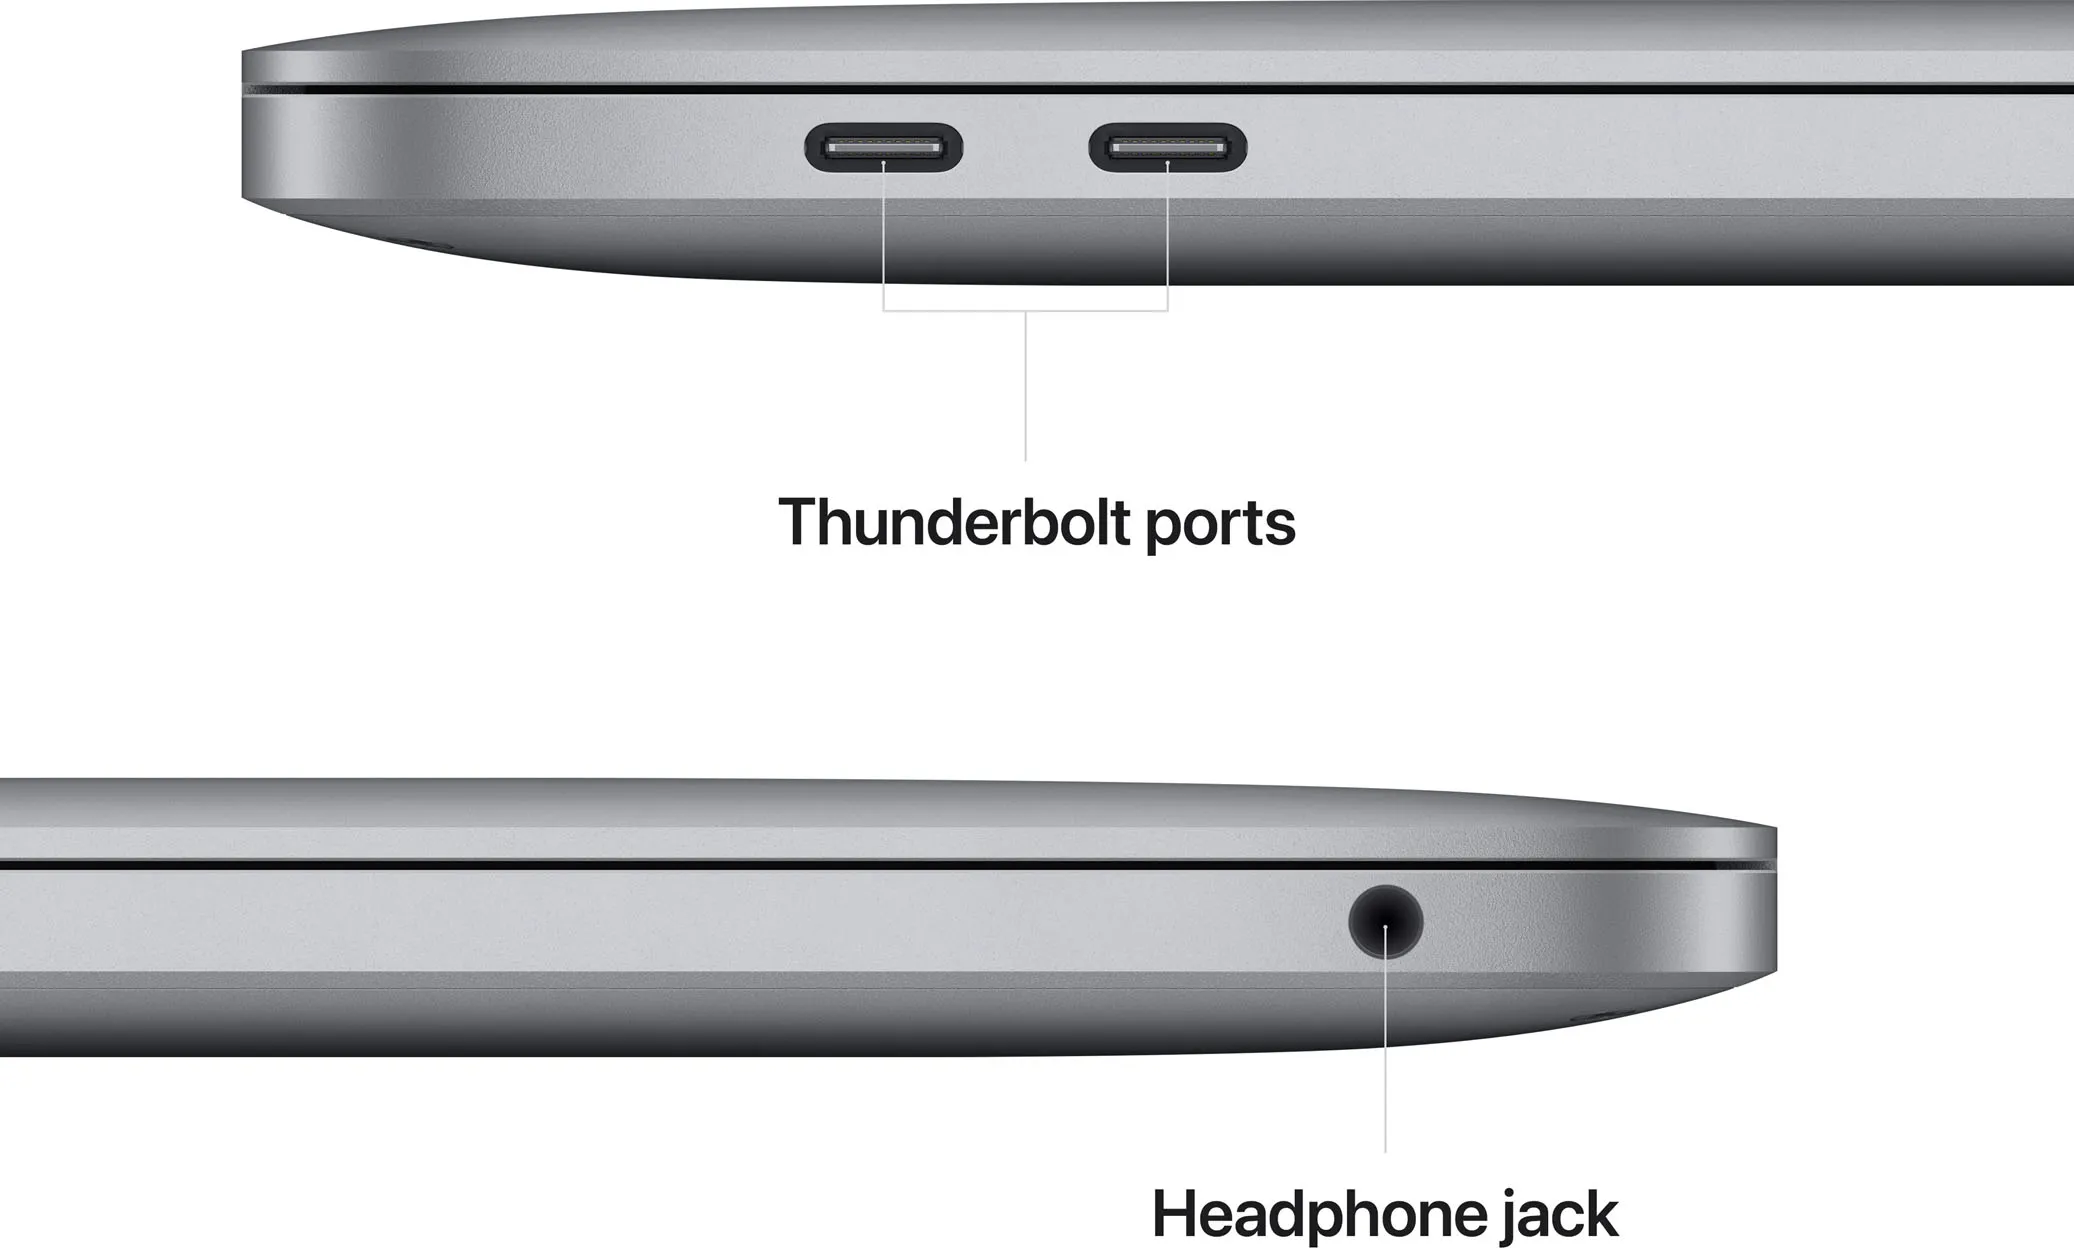 APPLE MacBook PRO M2 – (8 GB/256 GB SSD/macOS Monterey/13.3 Inch/1.38 Kg) – Space Grey – 2022